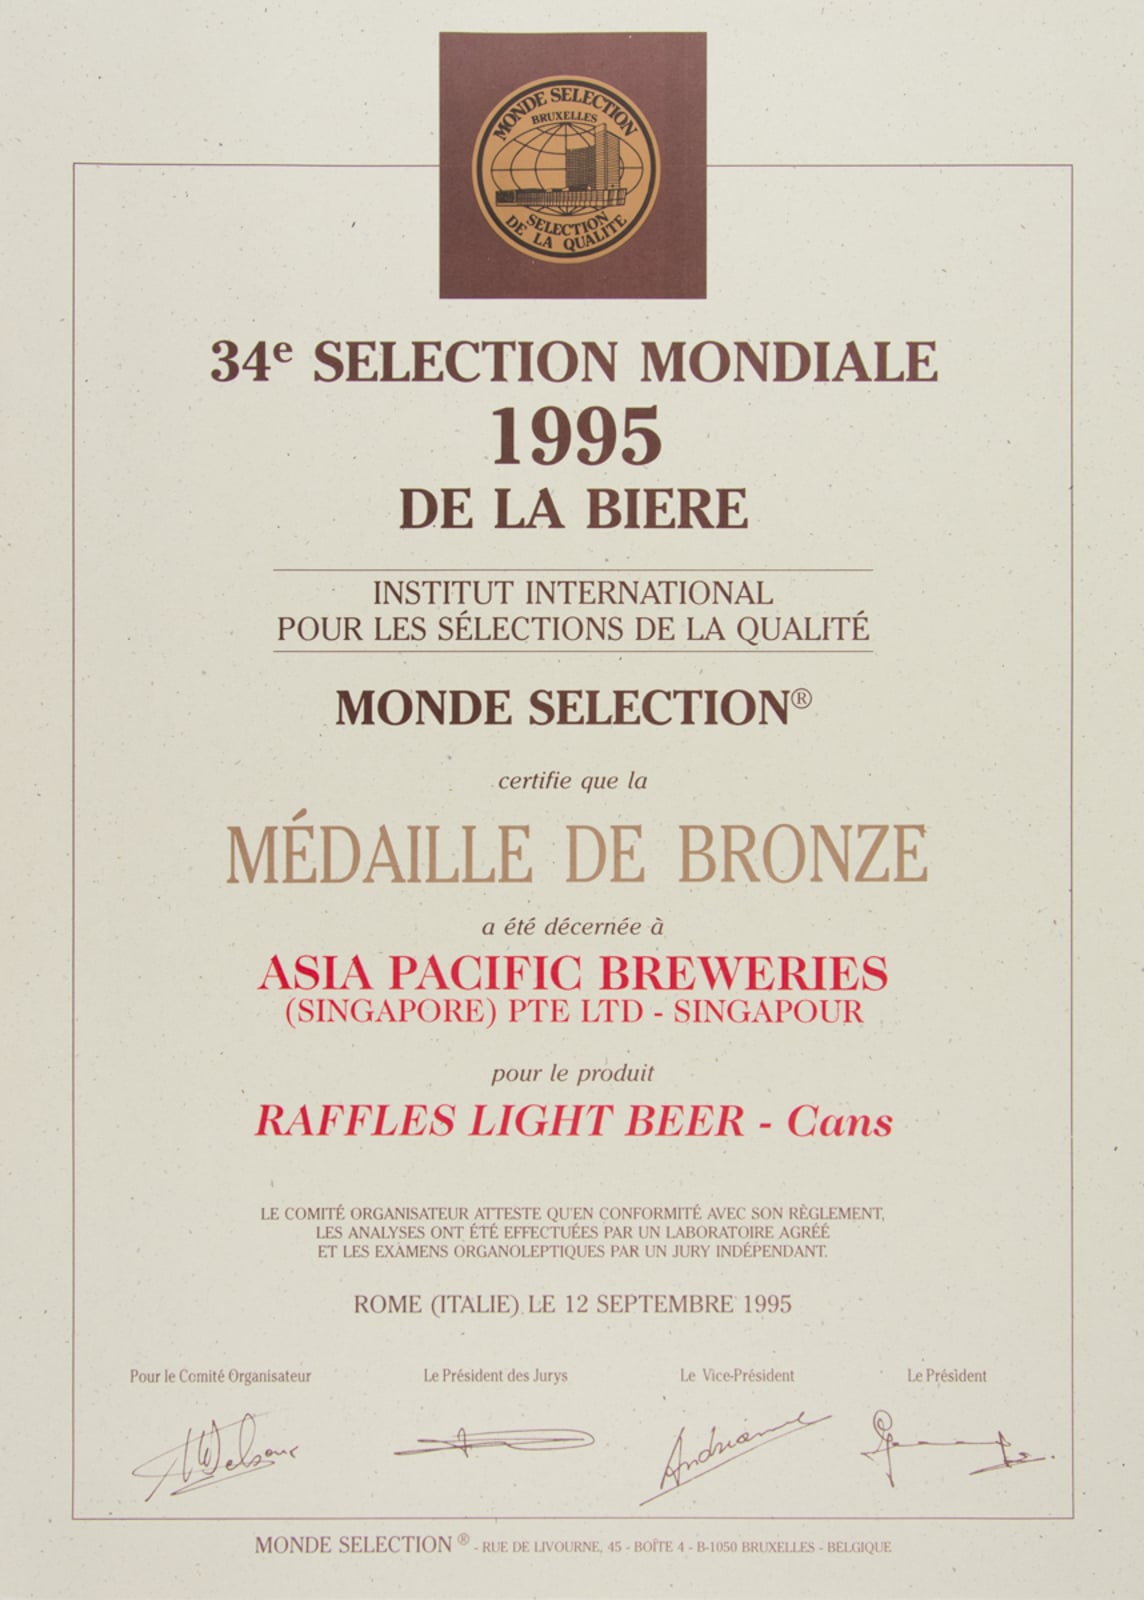 Raffles - Light Beer (Cans) Médaille de Bronze, Monde Selection Certificate 1995